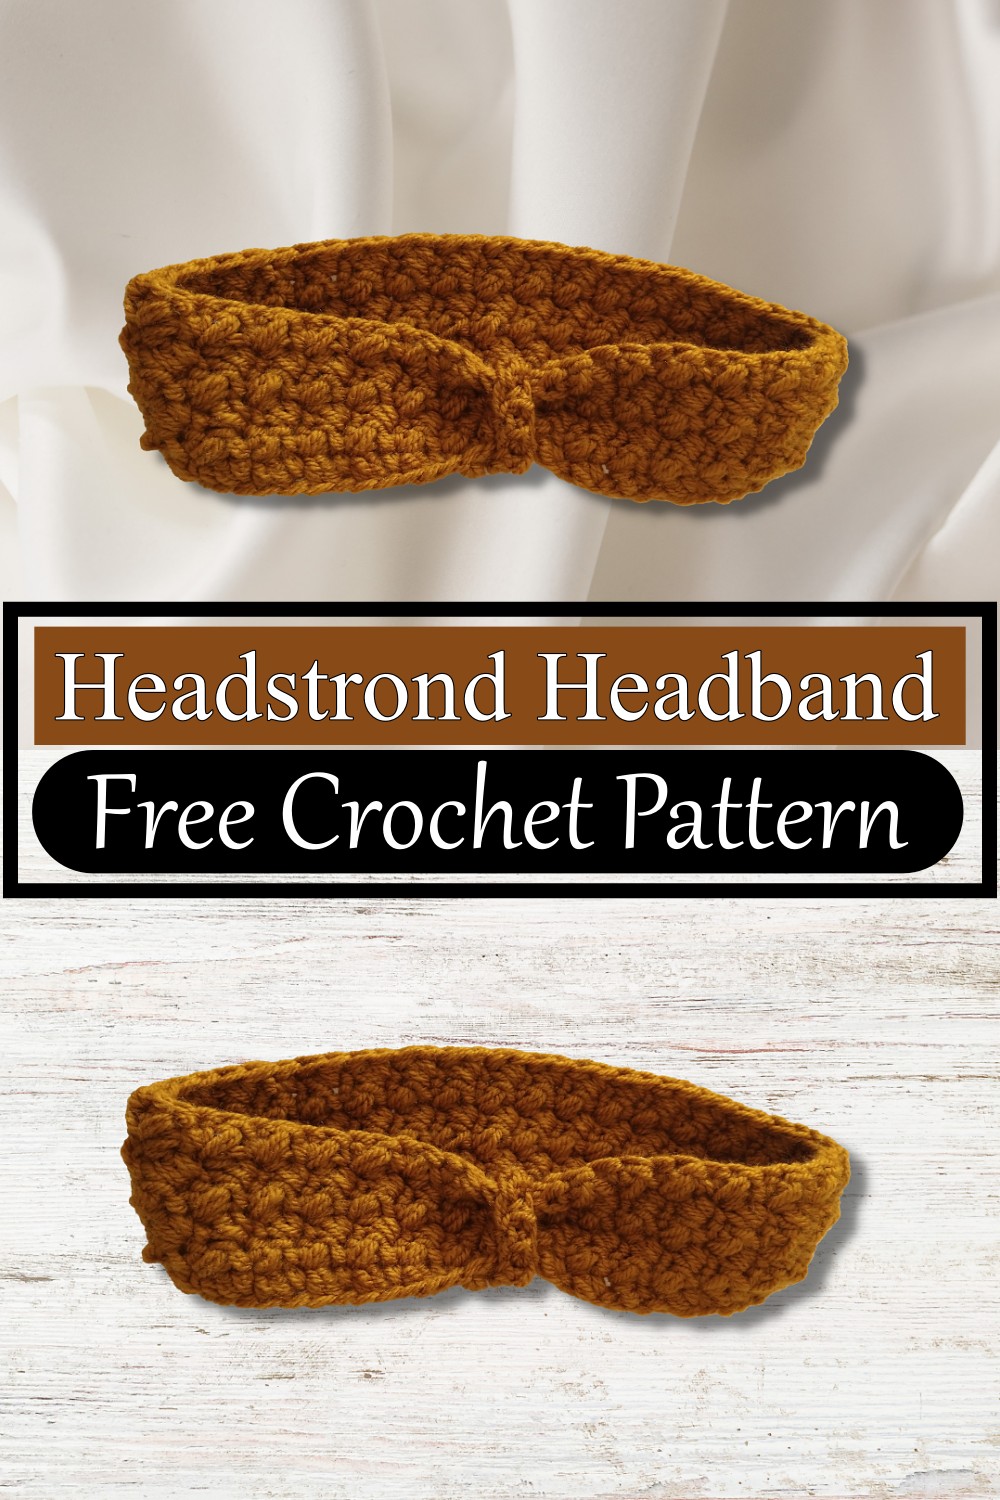 Headstrond Headband